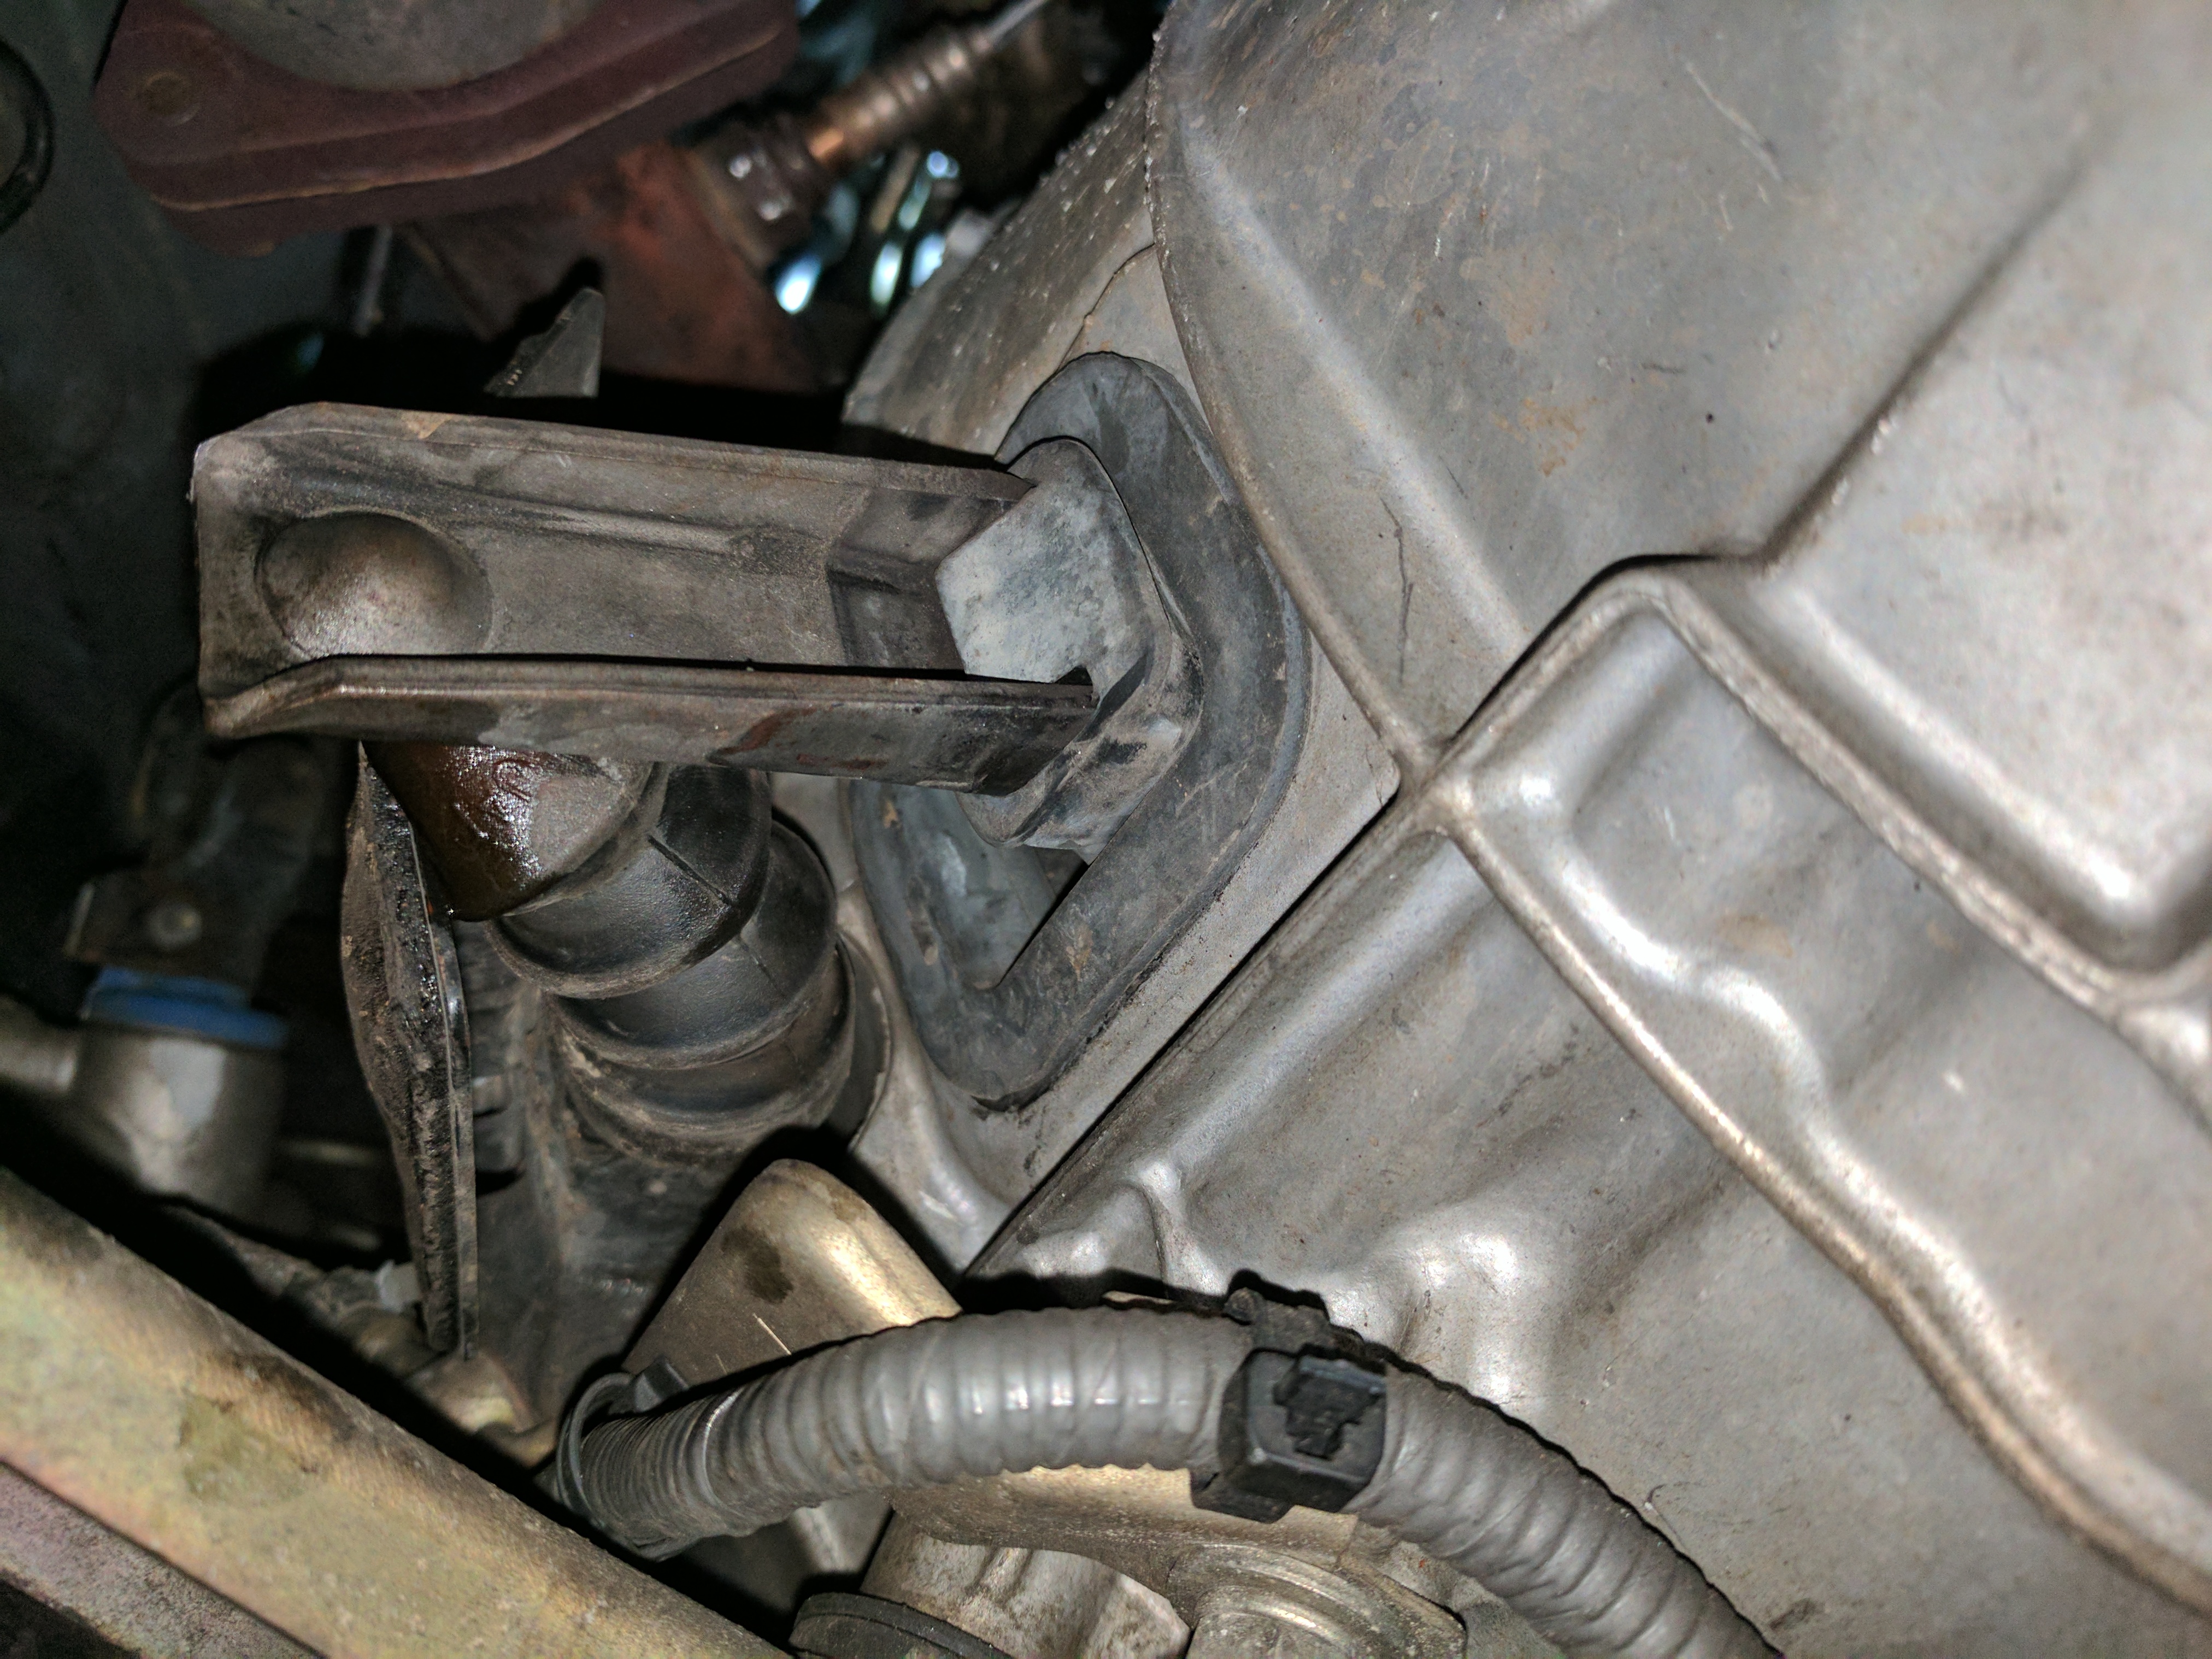 Clutch Slave Cylinder Issues? - MY350Z.COM - Nissan 350Z and 370Z Forum